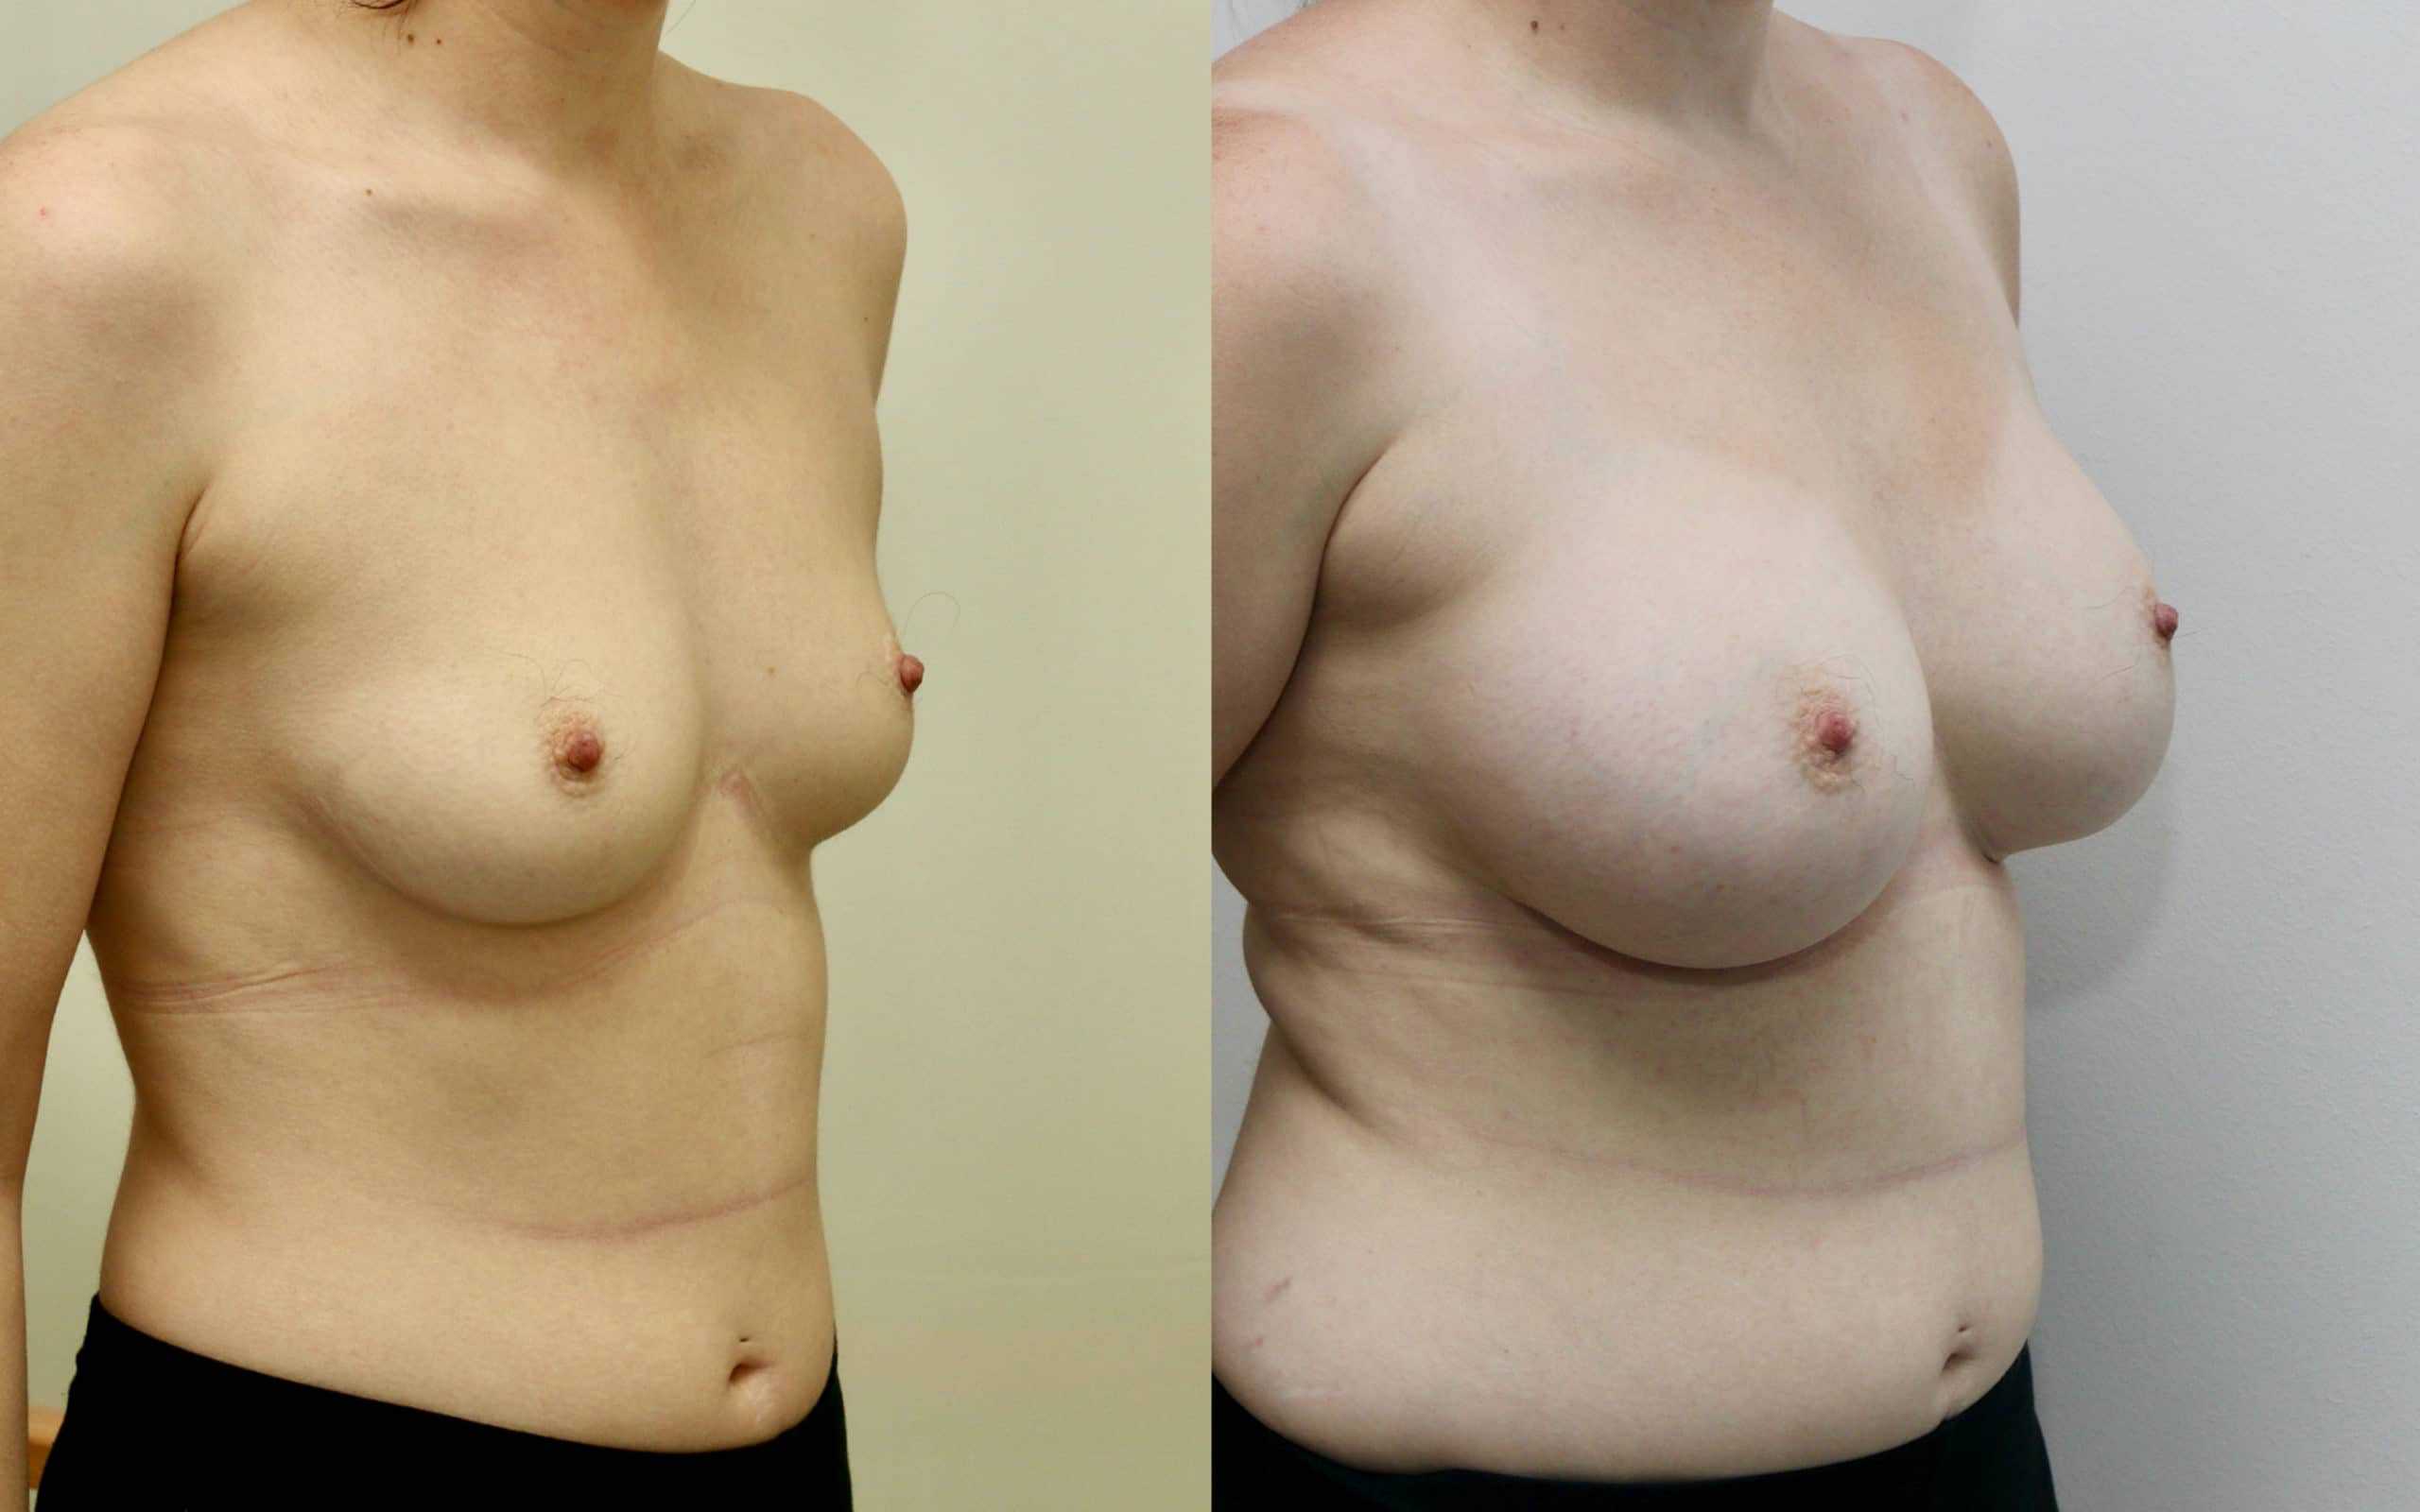 330cc breast implants below the muscle 1.5 years post op